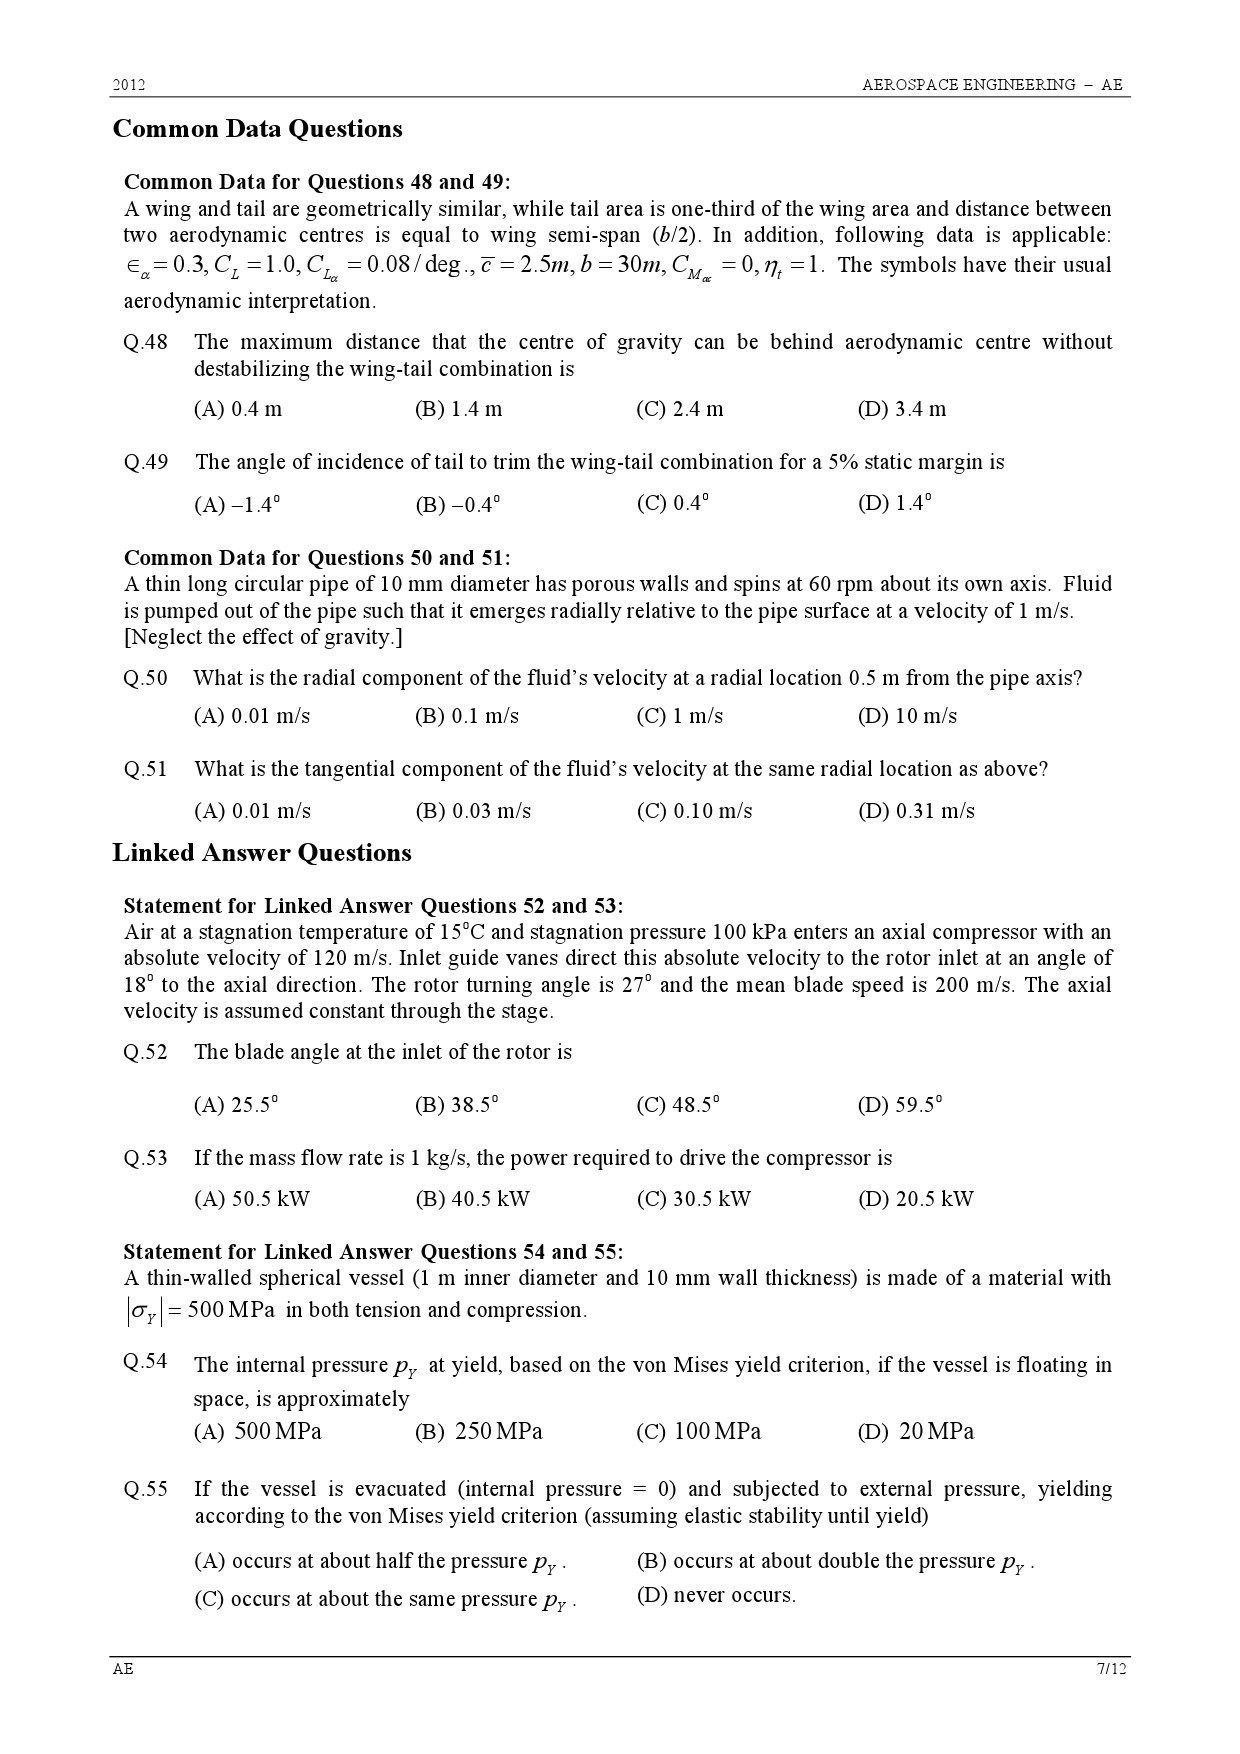 GATE Exam 2012 Aerospace Engineering Question Paper 7